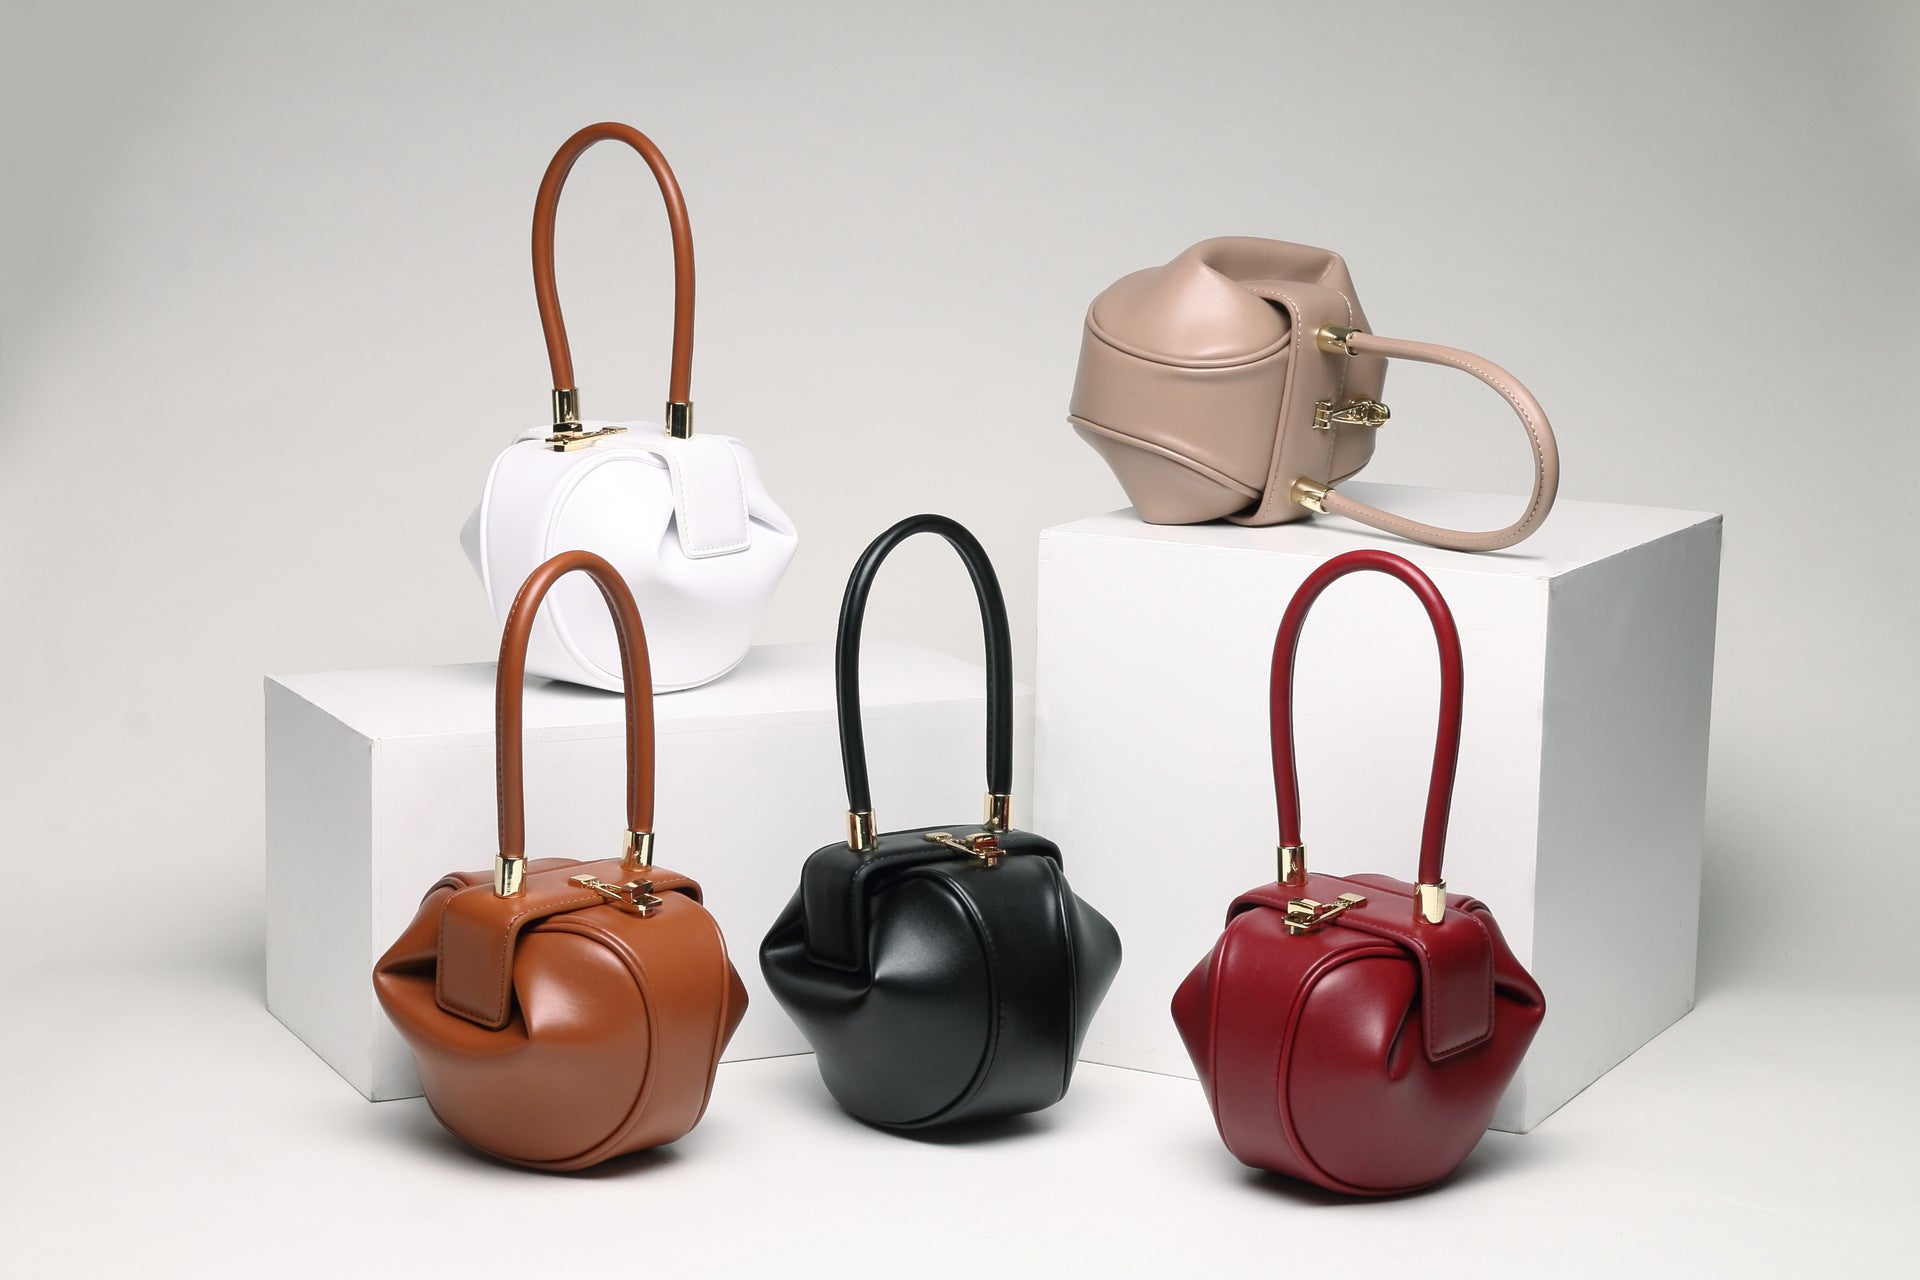 handmade handbags from echopurse for women-echopurse blog post-5 ways to simplify the way you choose handbag on a budget.